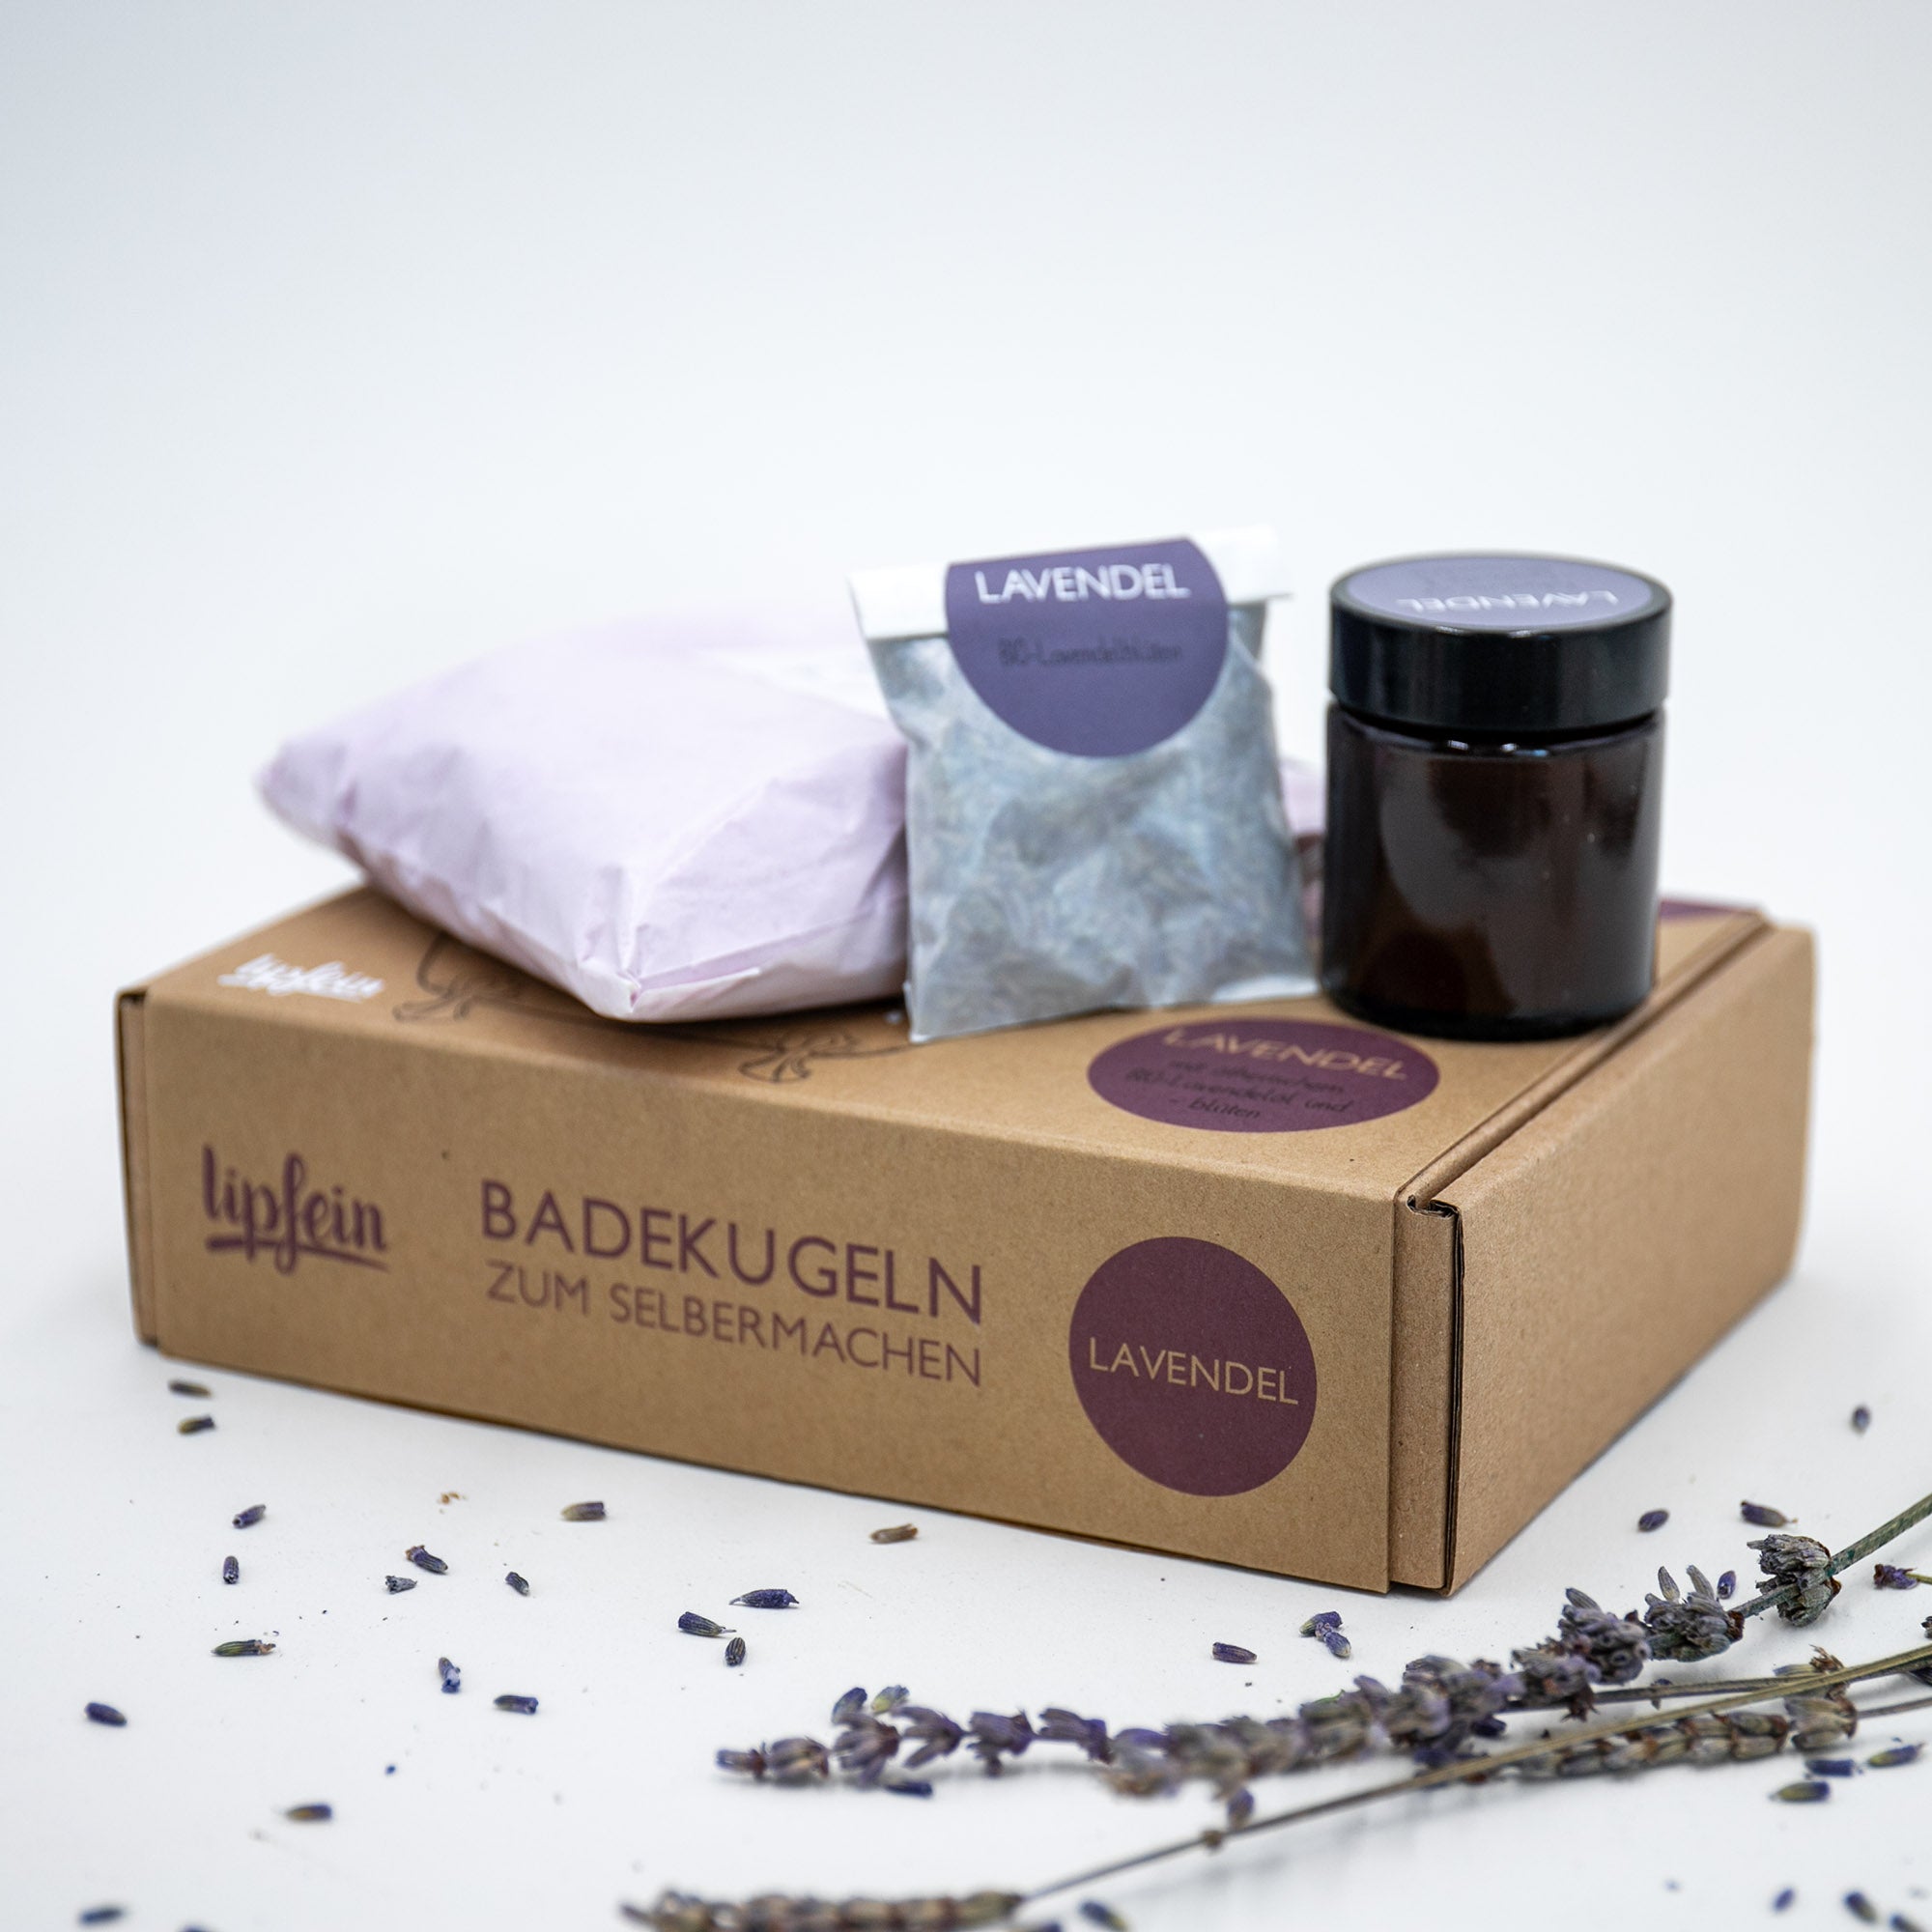 Lipfein DIY-Set Badekugeln Lavendel